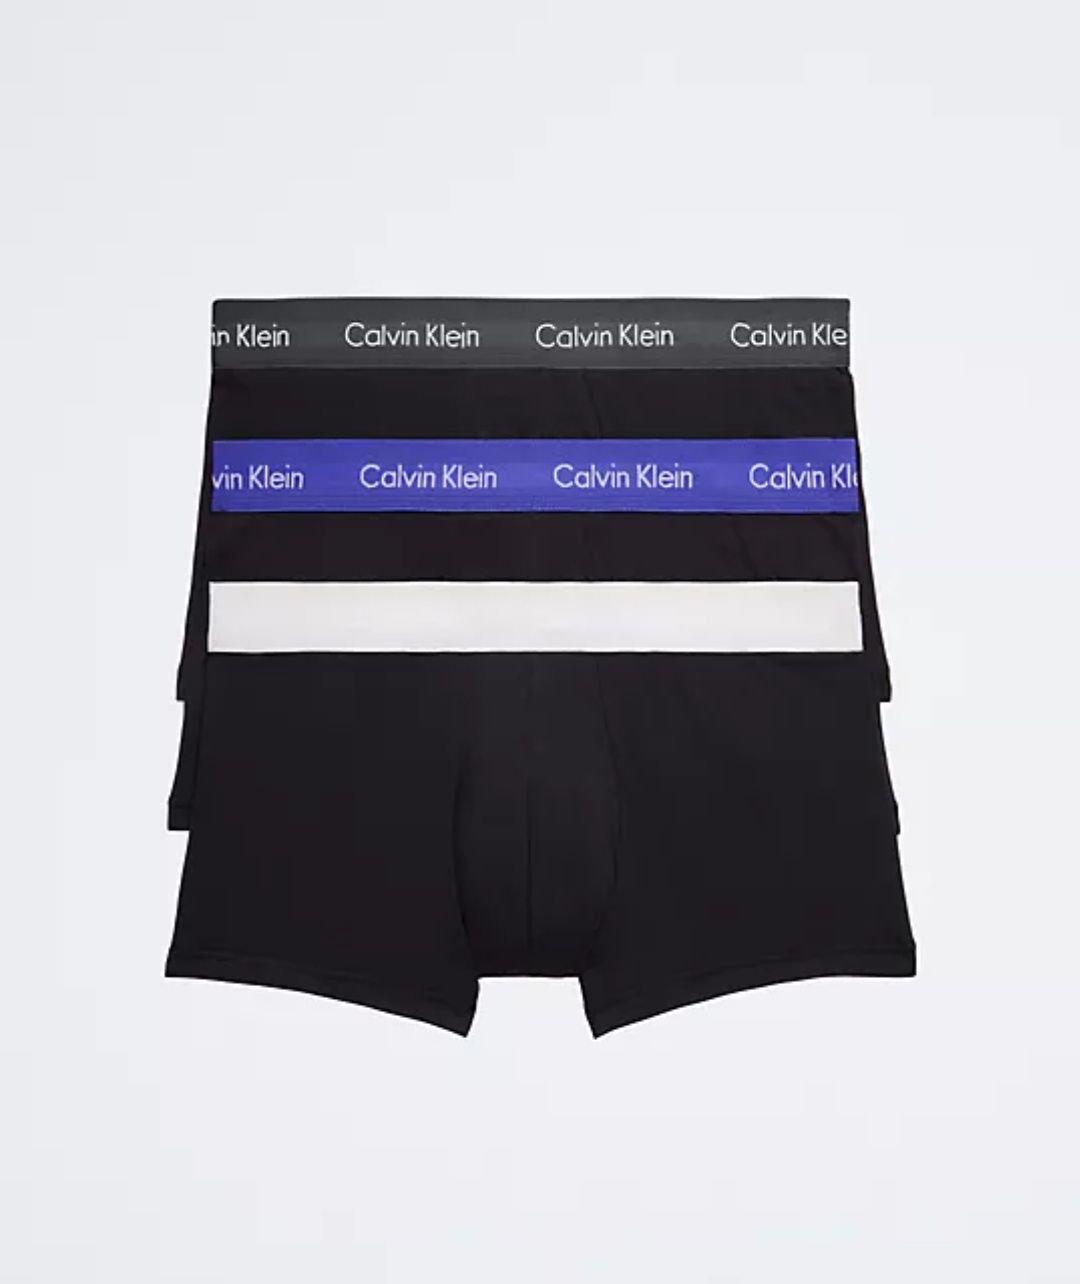 Трусы шортики Calvin Klein low trunk оригинал